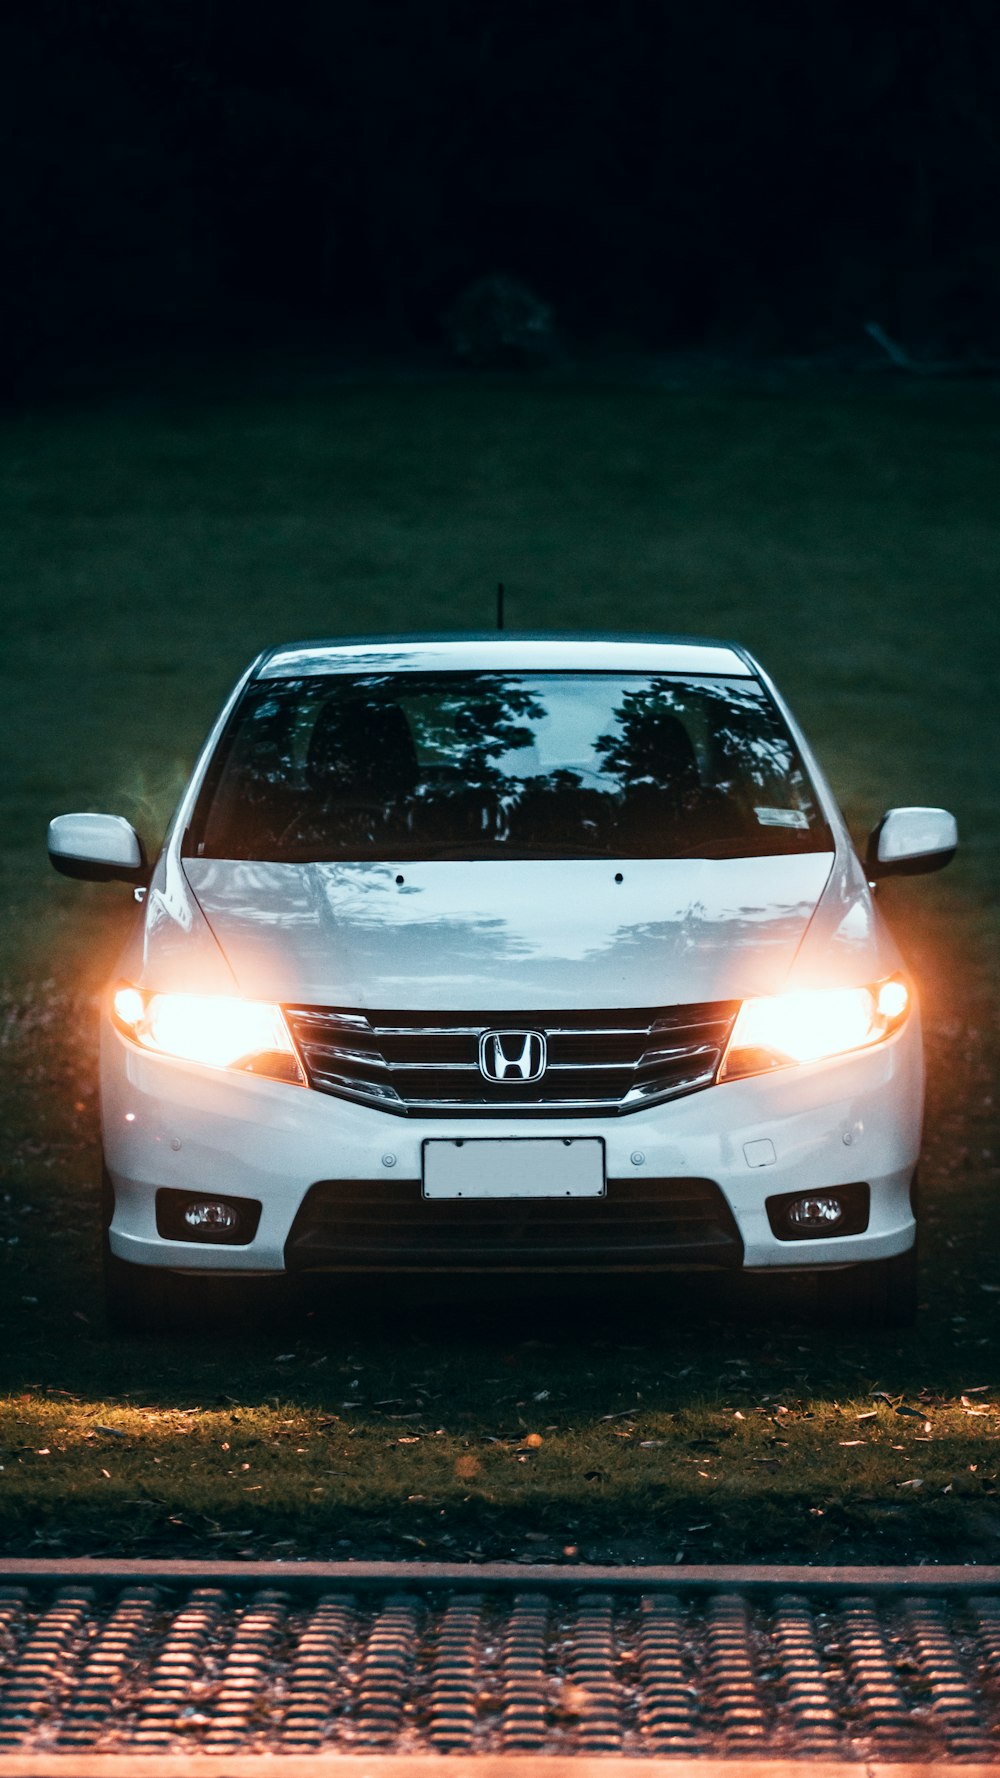 weißes Honda-Fahrzeug tagsüber